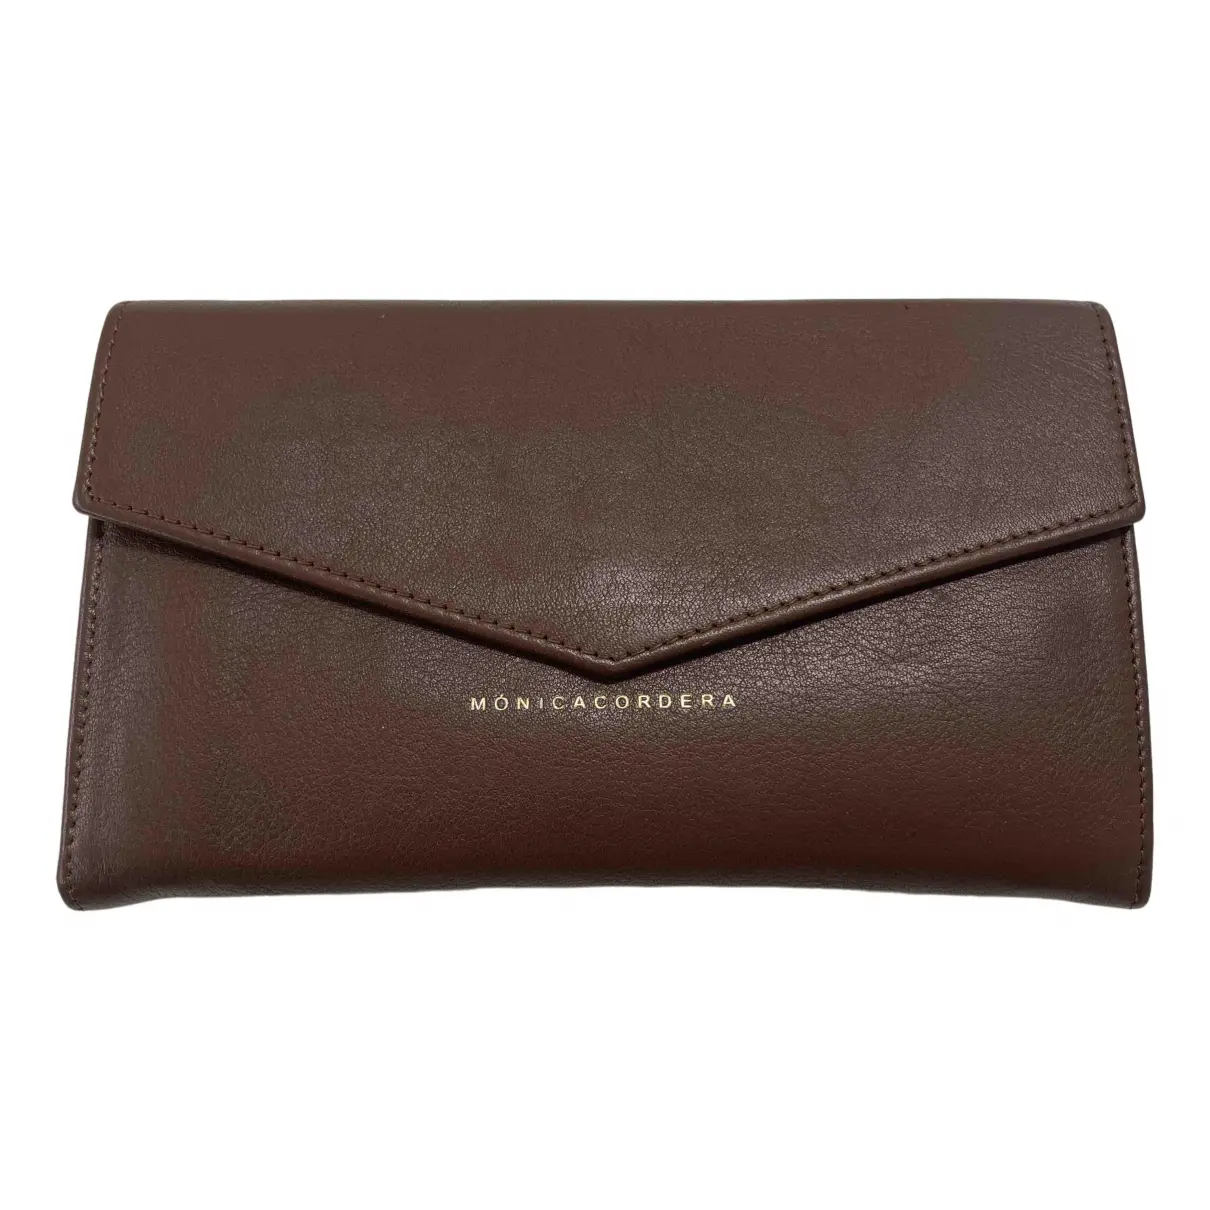 Leather wallet Monica Cordera